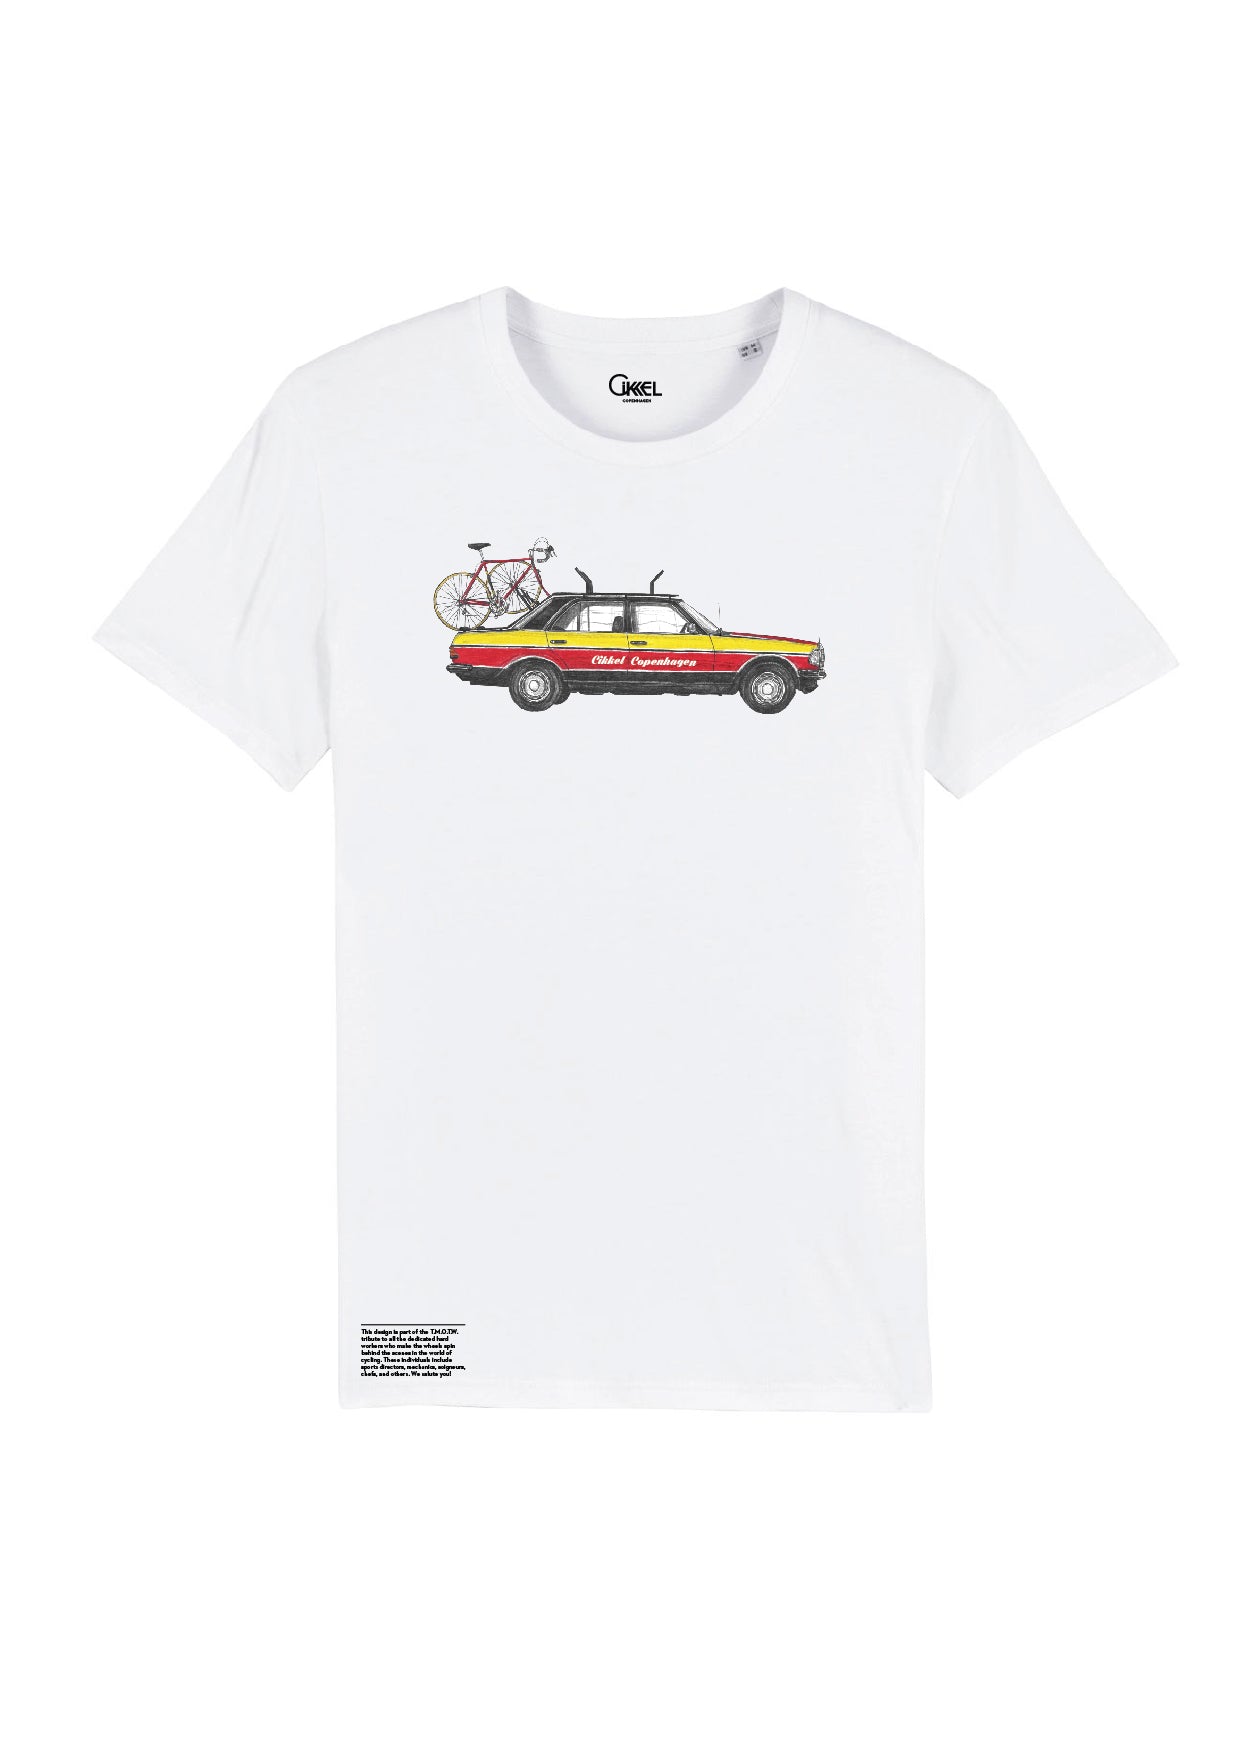 Rød og gul 1980 Cycling Team Car- T-Shirt